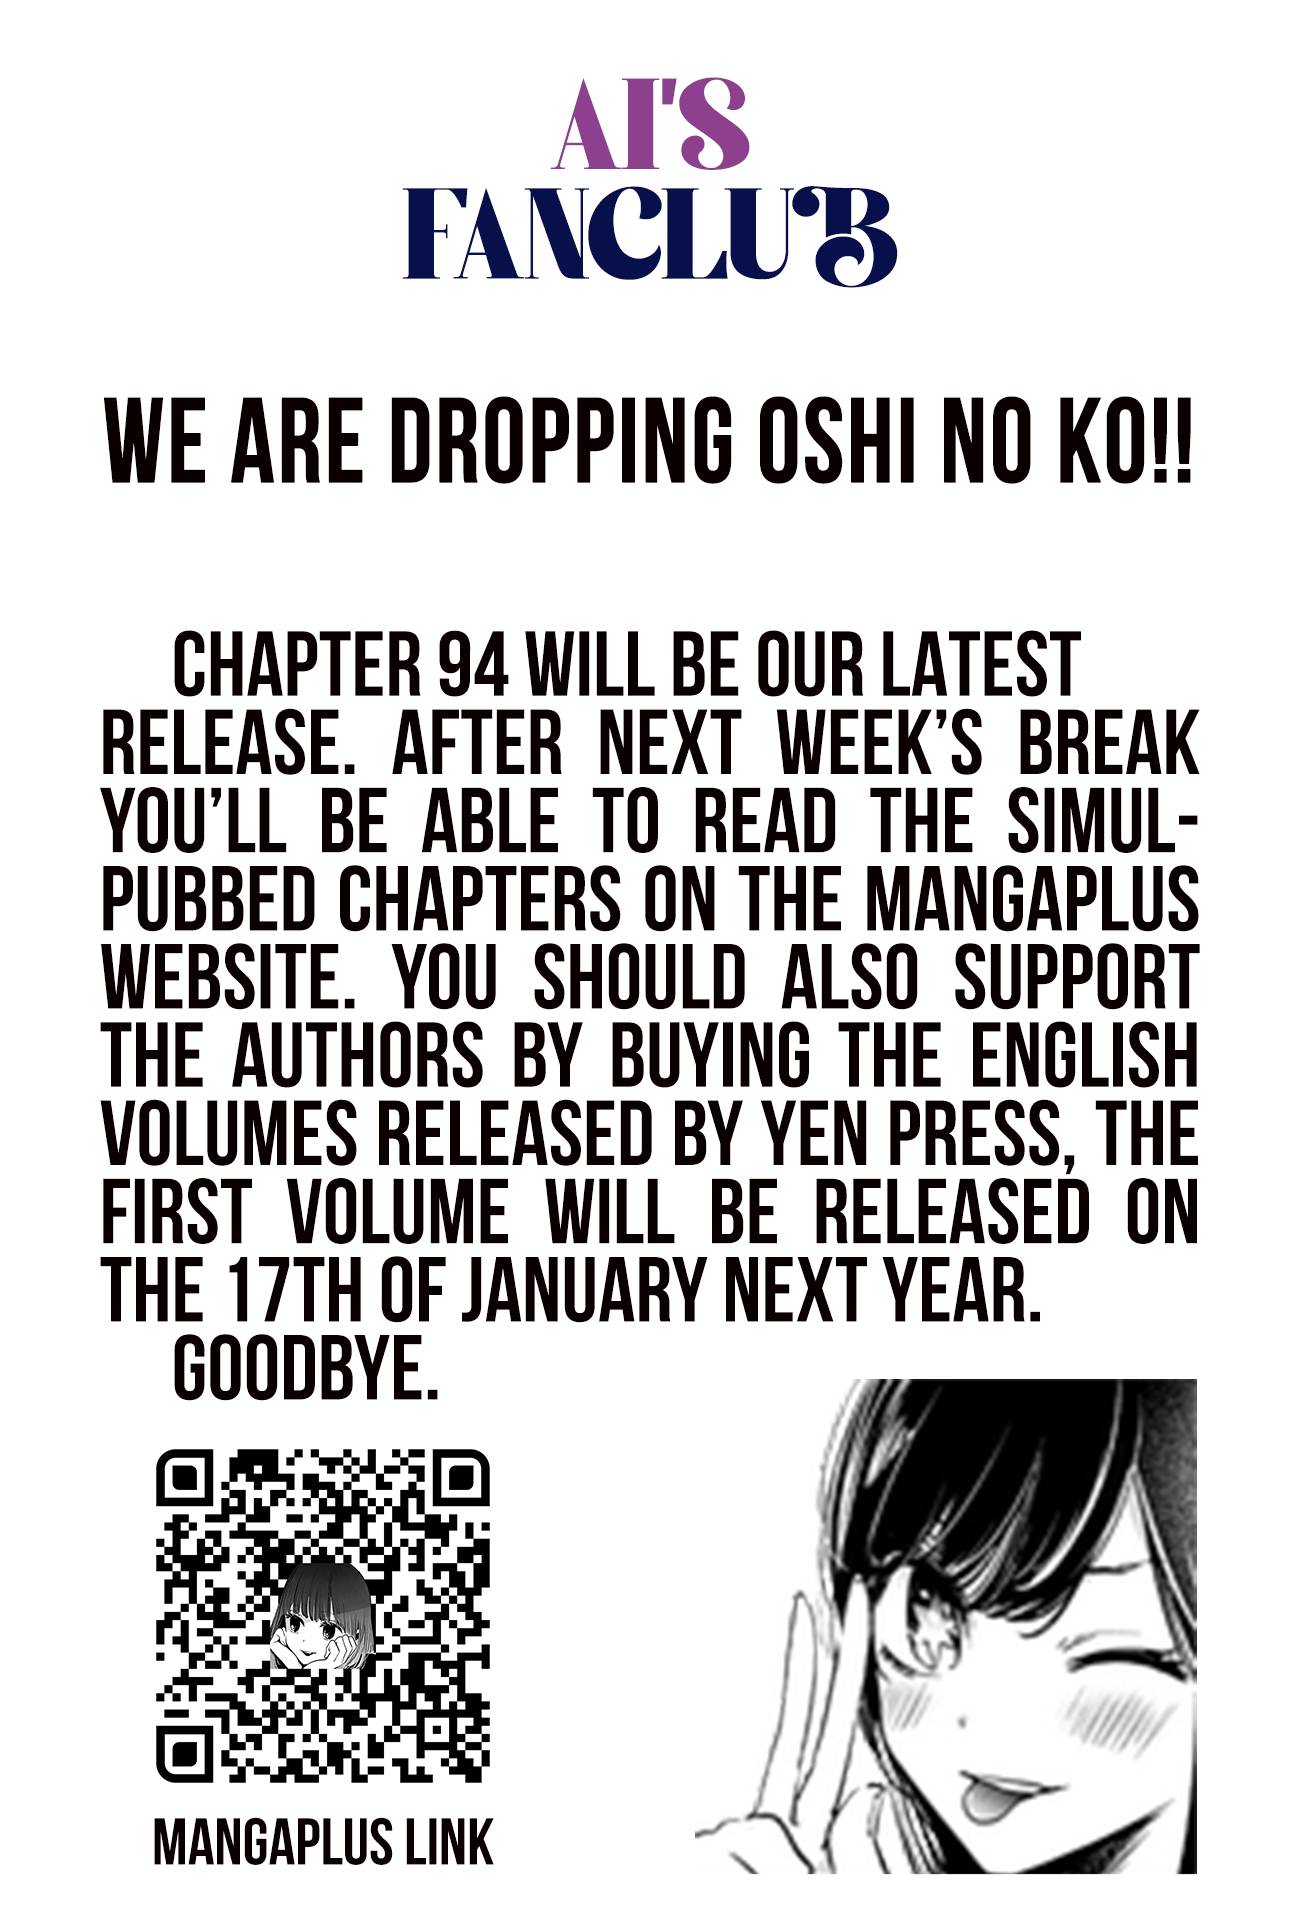 Oshi No Ko manga: Where can you read the original series in English?